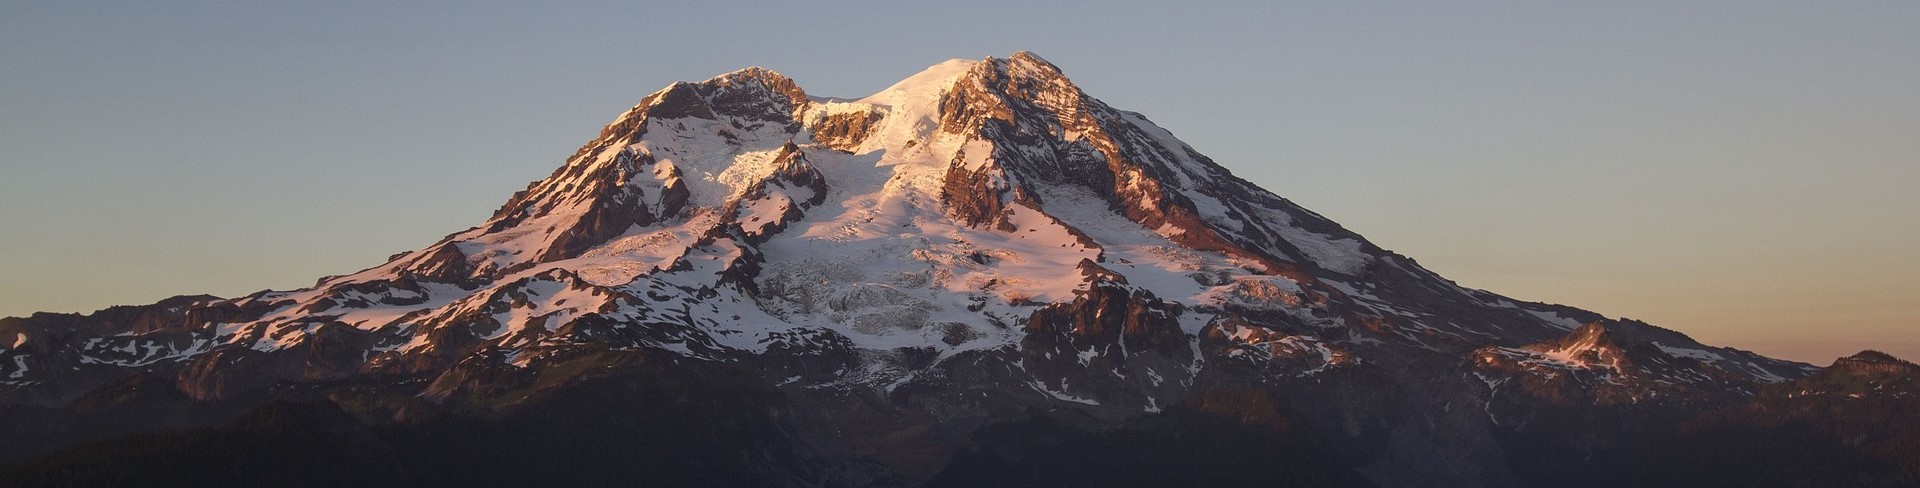 A view of Mount Rainier, Maryland - CarDonations4Cancer.org